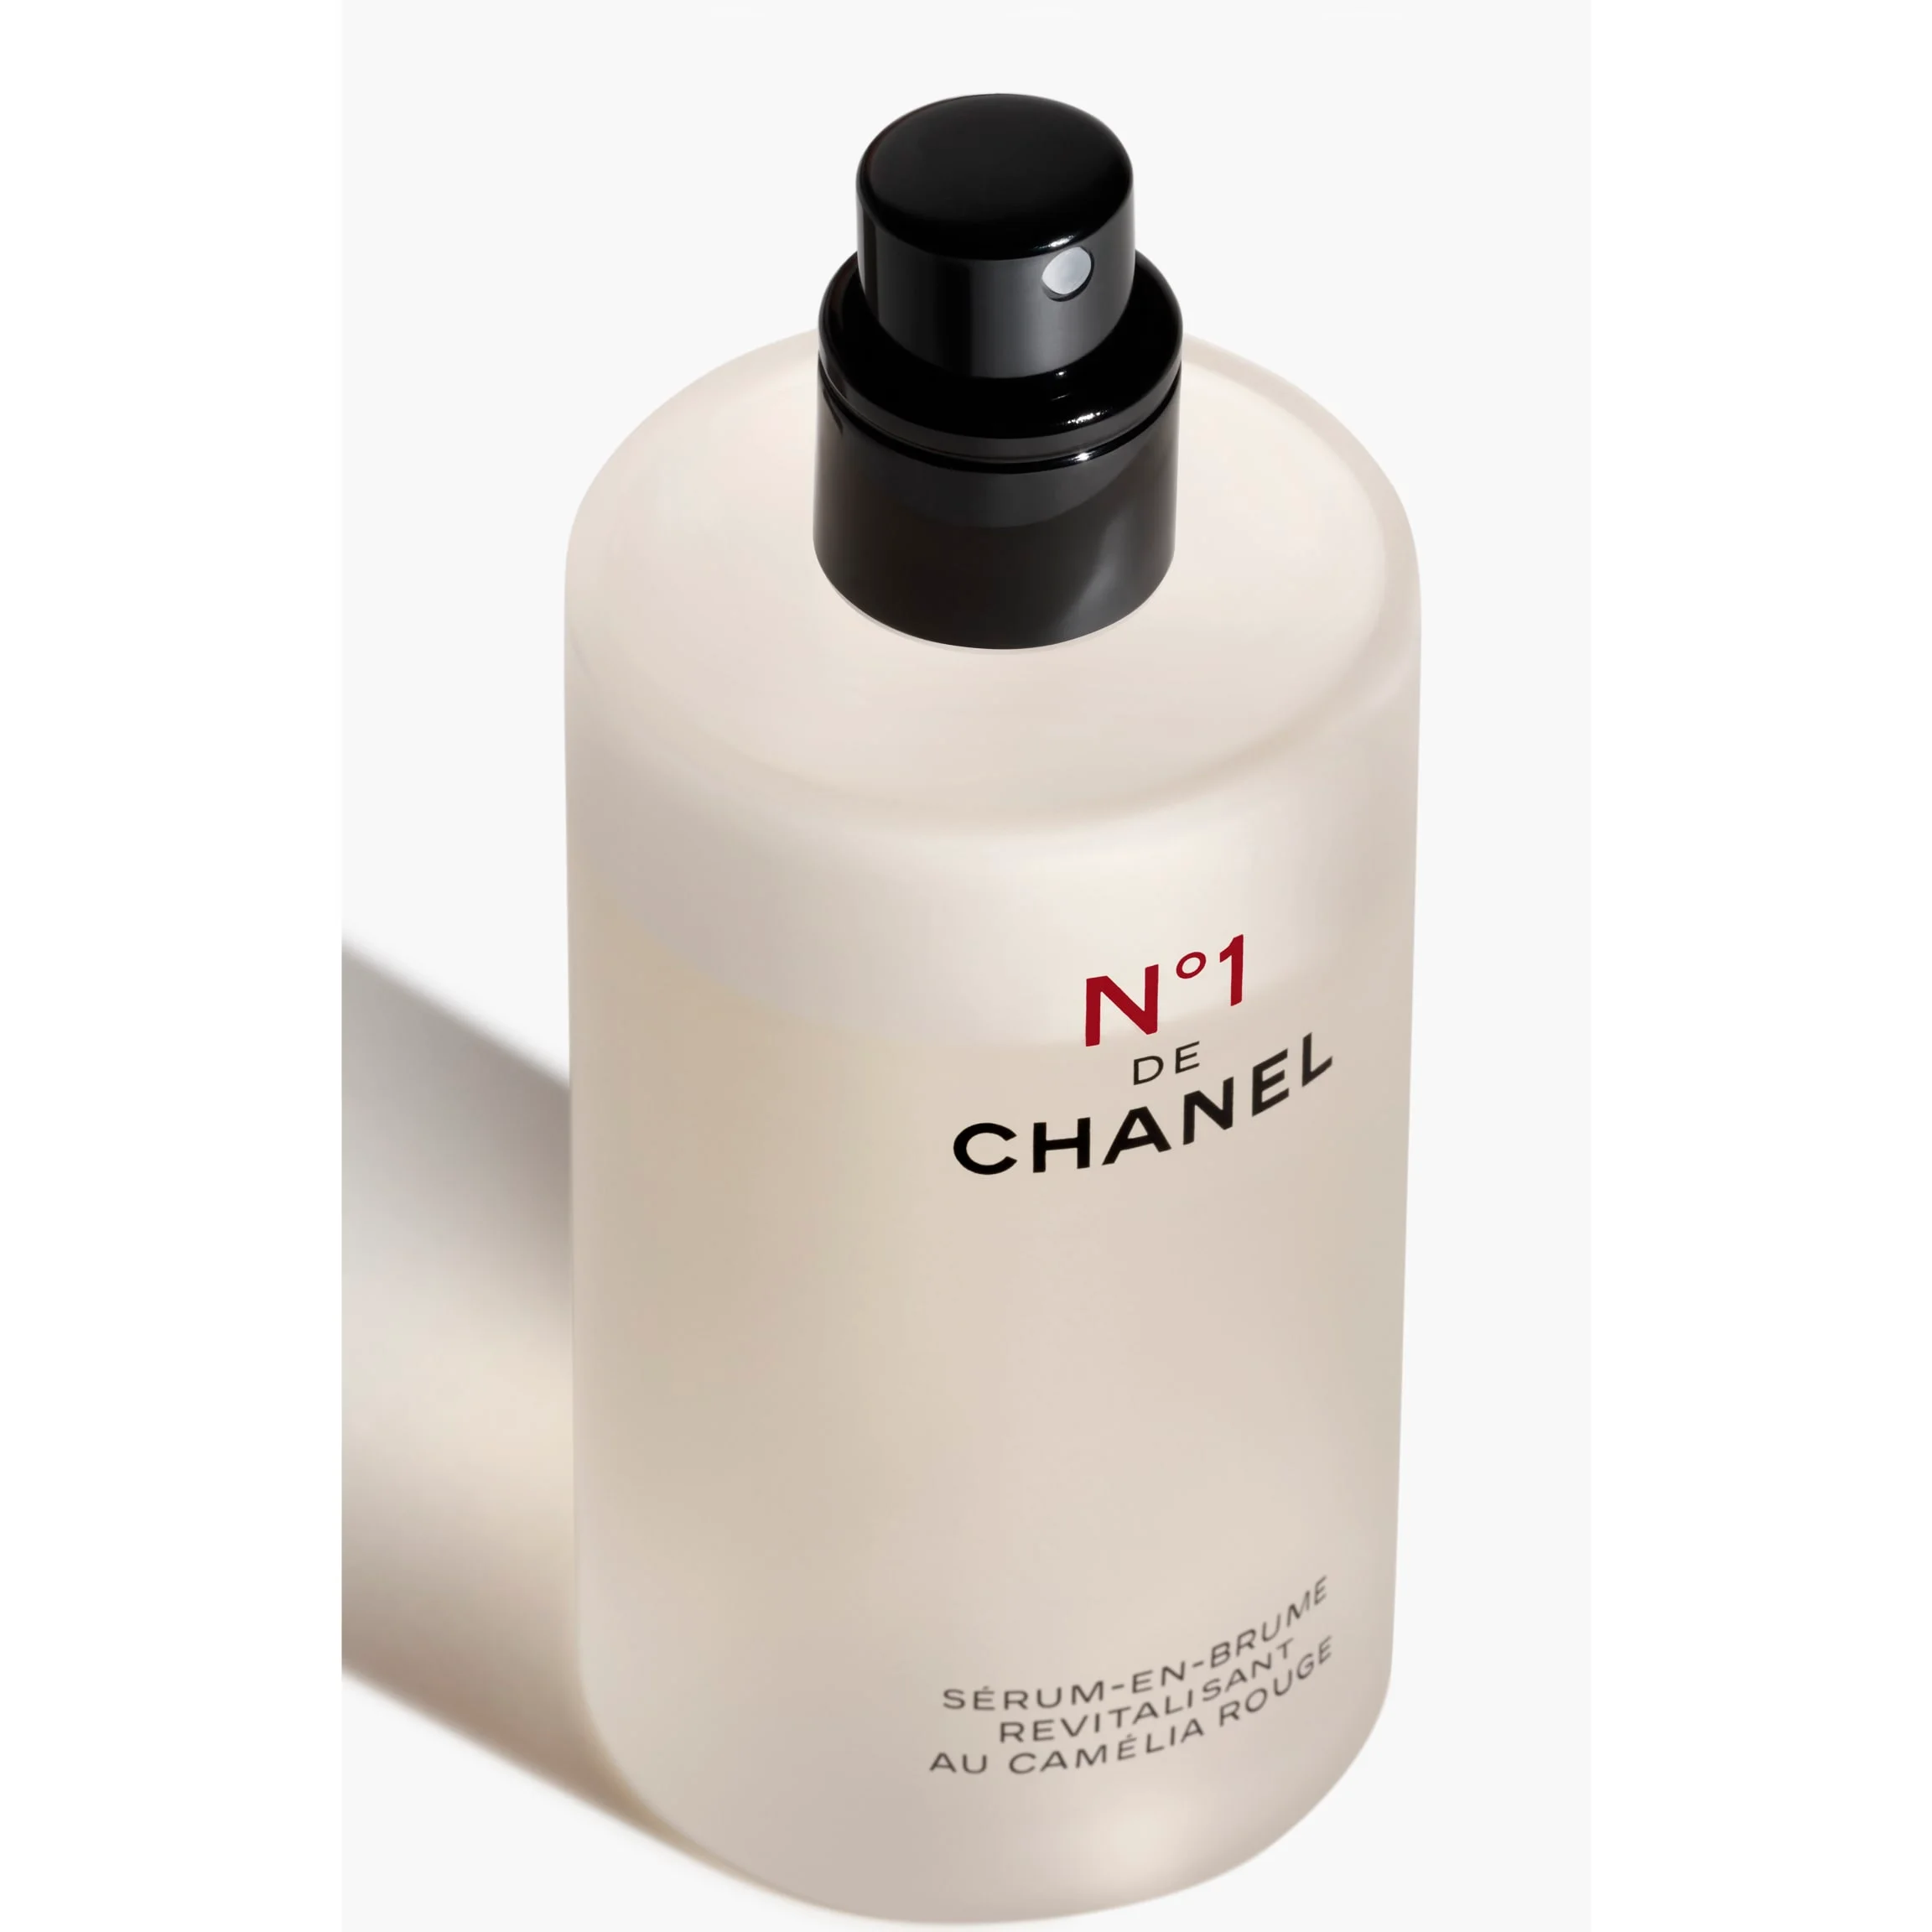 Chanel + N°1 DE CHANEL REVITALIZING SERUM-IN-MIST Anti-Pollution